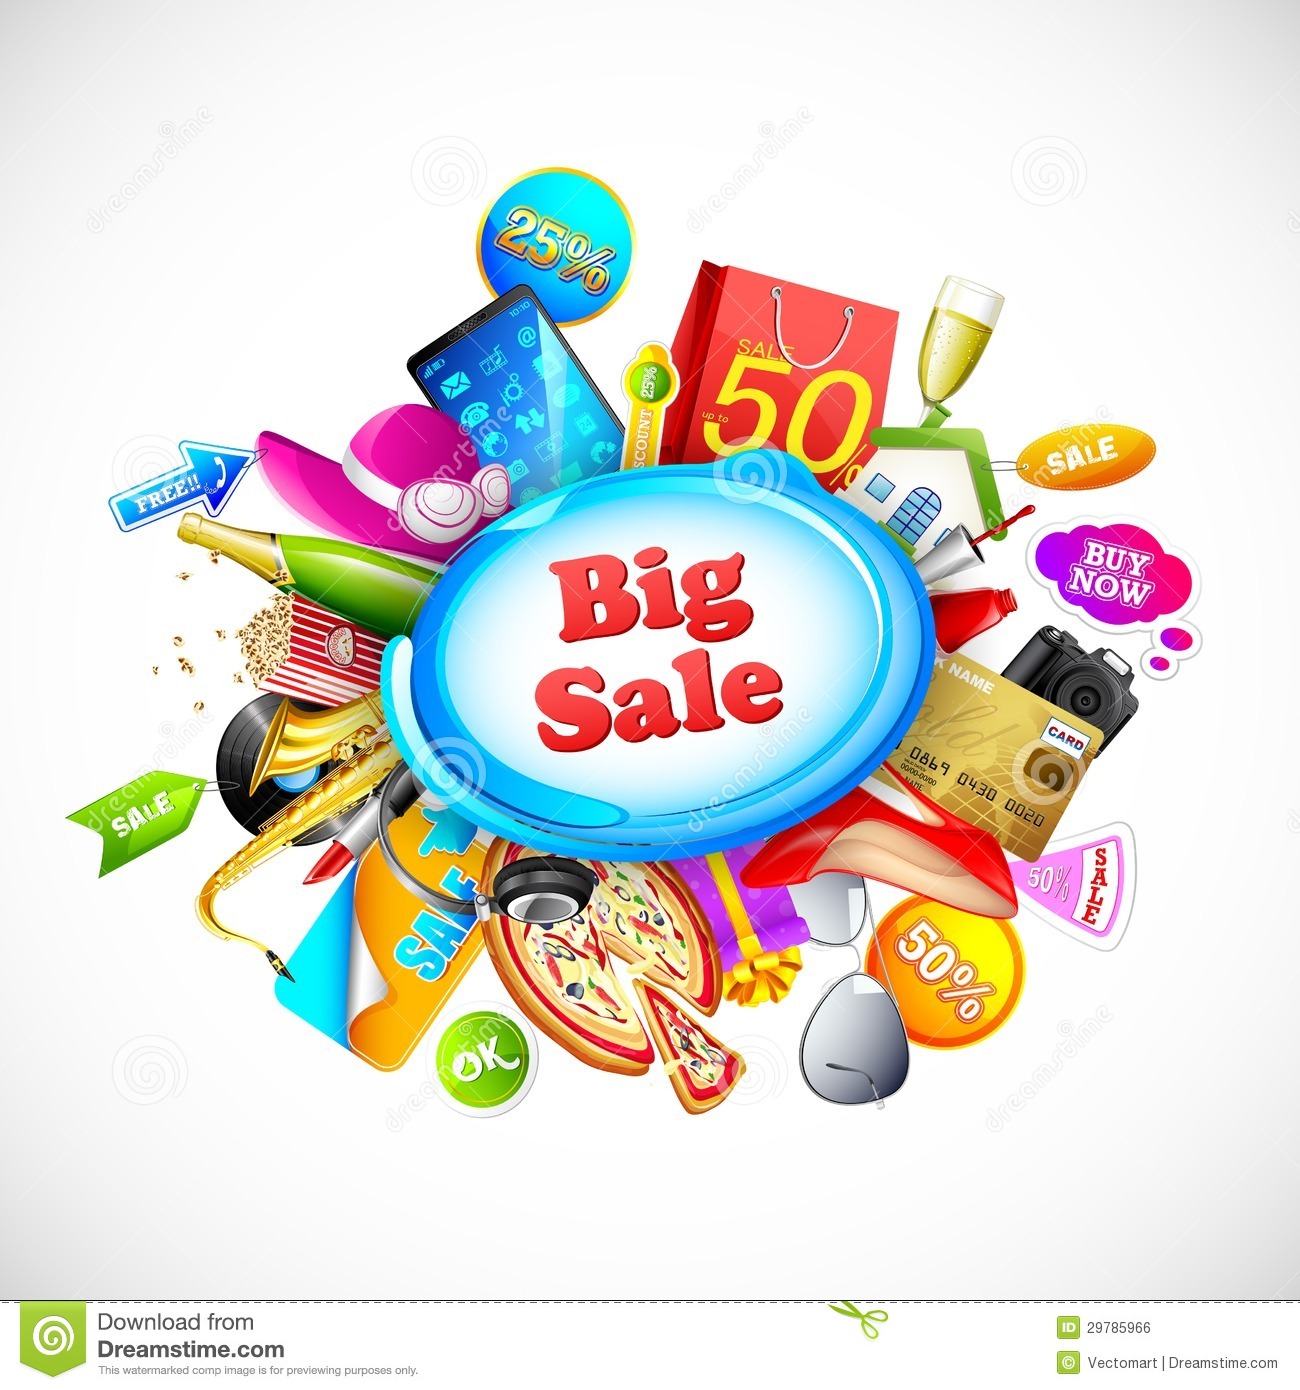 Big Sale Royalty Free Stock Image   Image  29785966